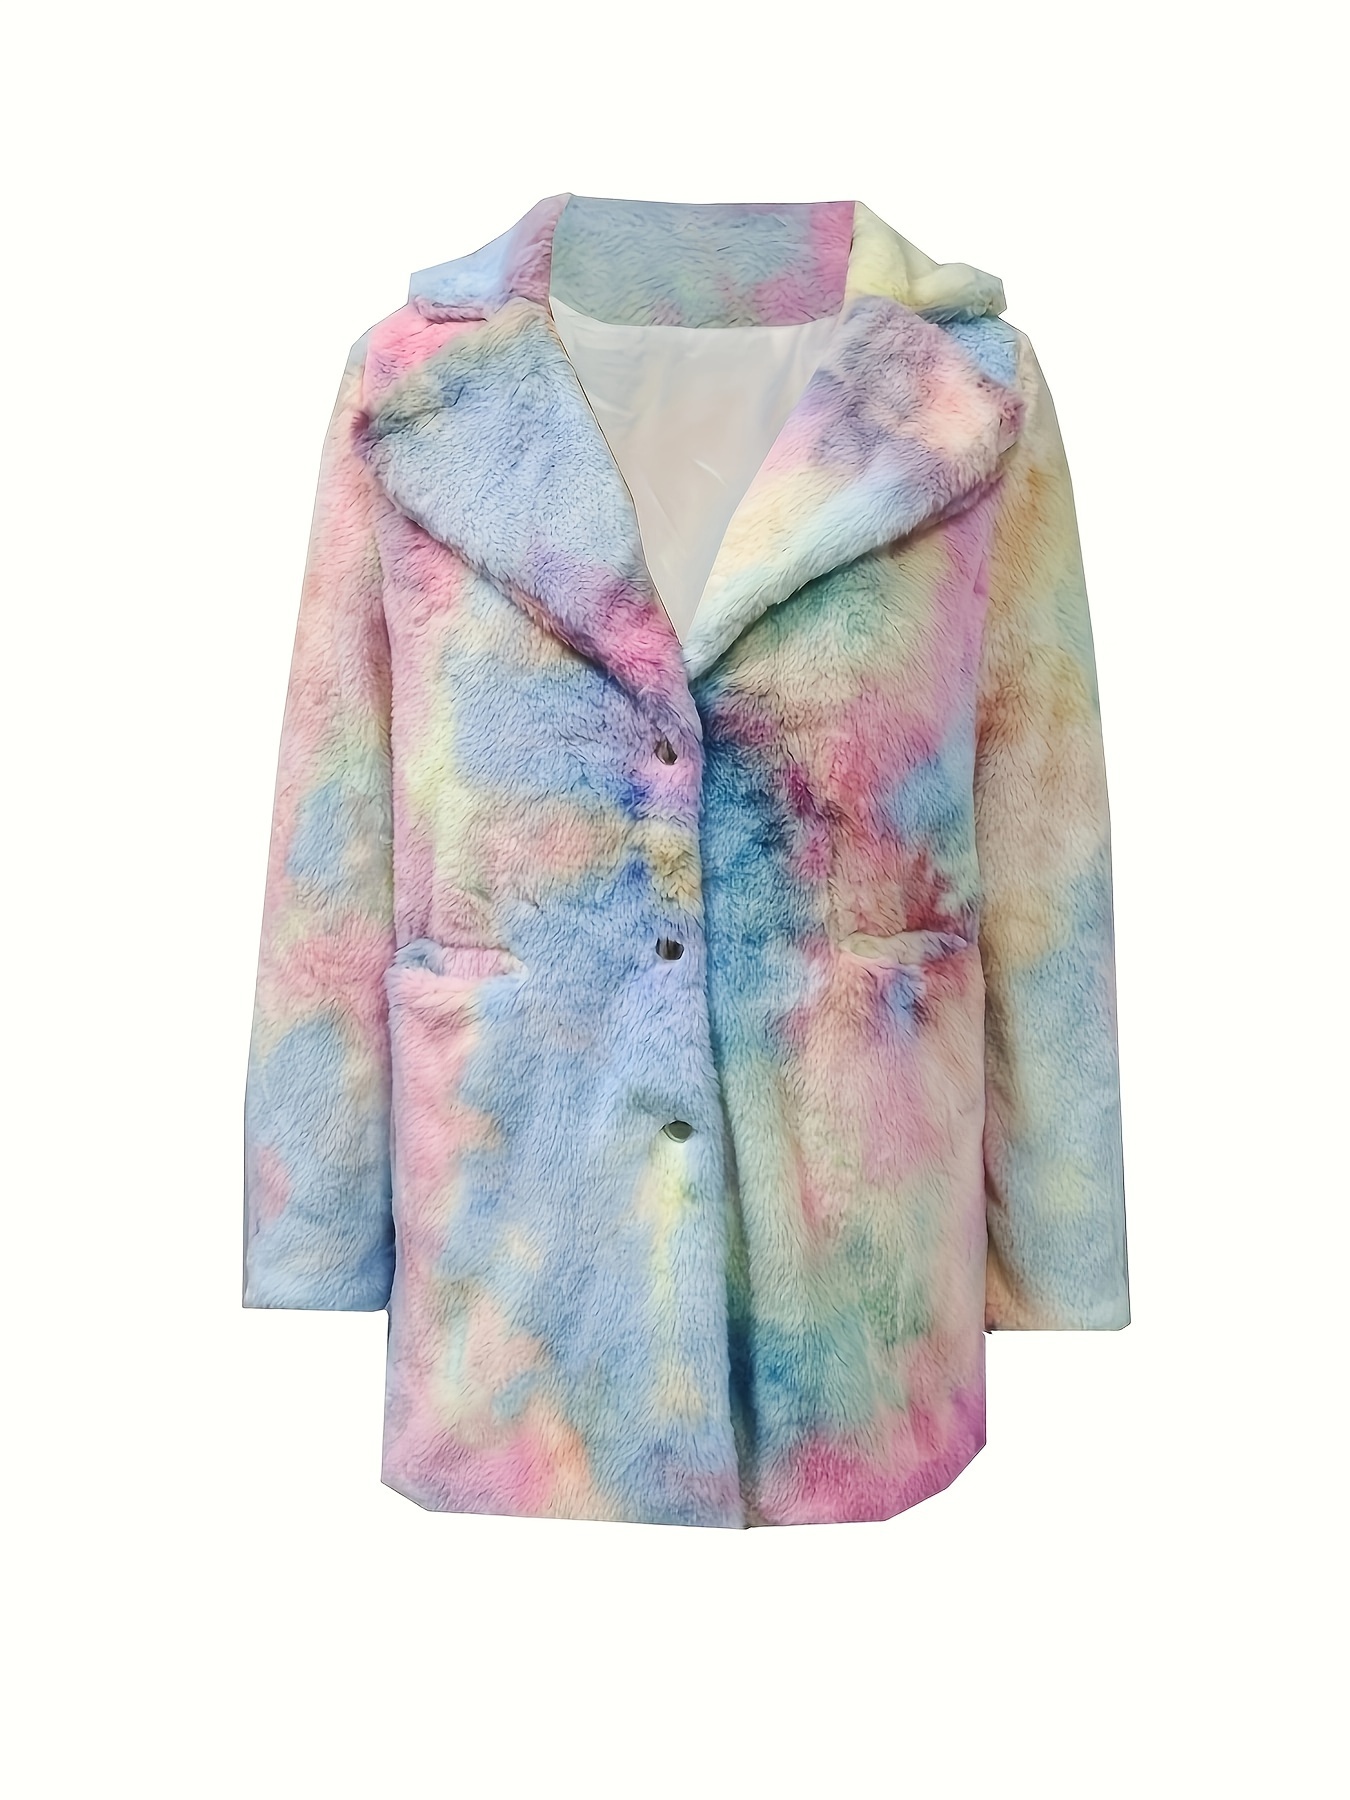 Lolmot Ladies Winter Loose Top Solid Color Long Sleeve Hoodless Casual  Plush Jacket/Jacket 